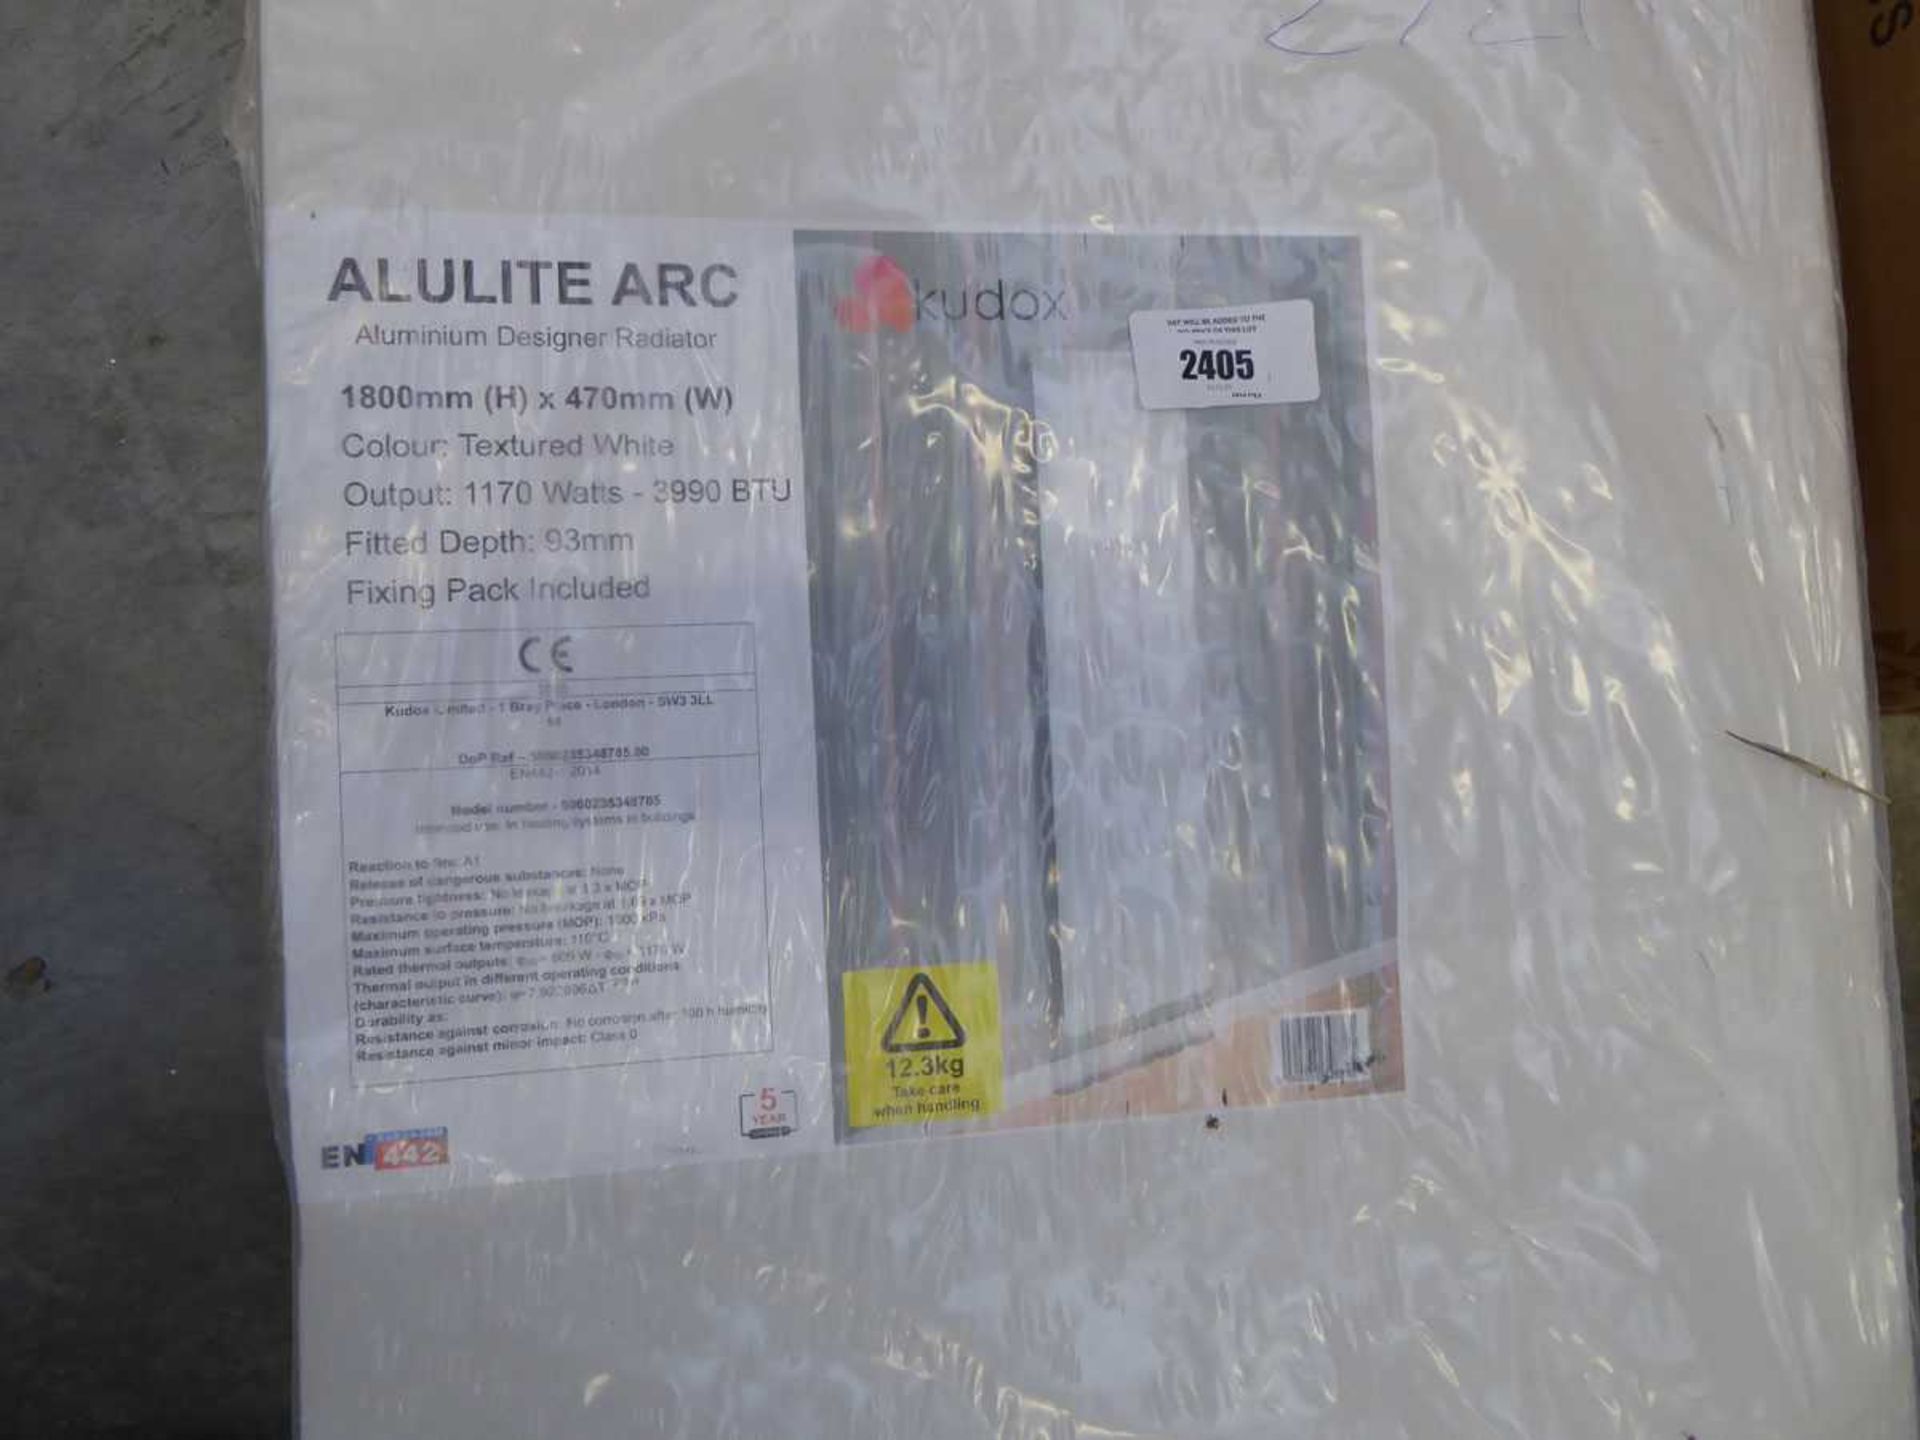 +VAT Boxed Kudox Alulite Arc aluminium designer radiator (1800mm x 470mm) - Image 2 of 2